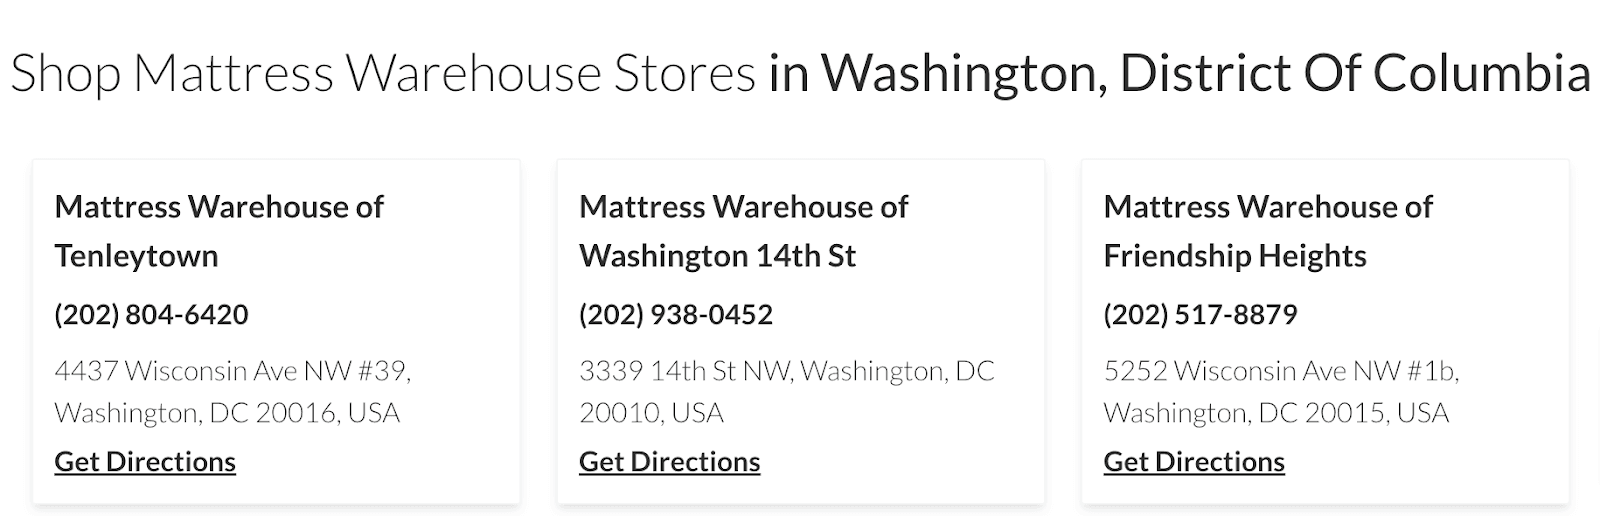 Screenshot of Mattress Warehouse locations in Washington, DC.